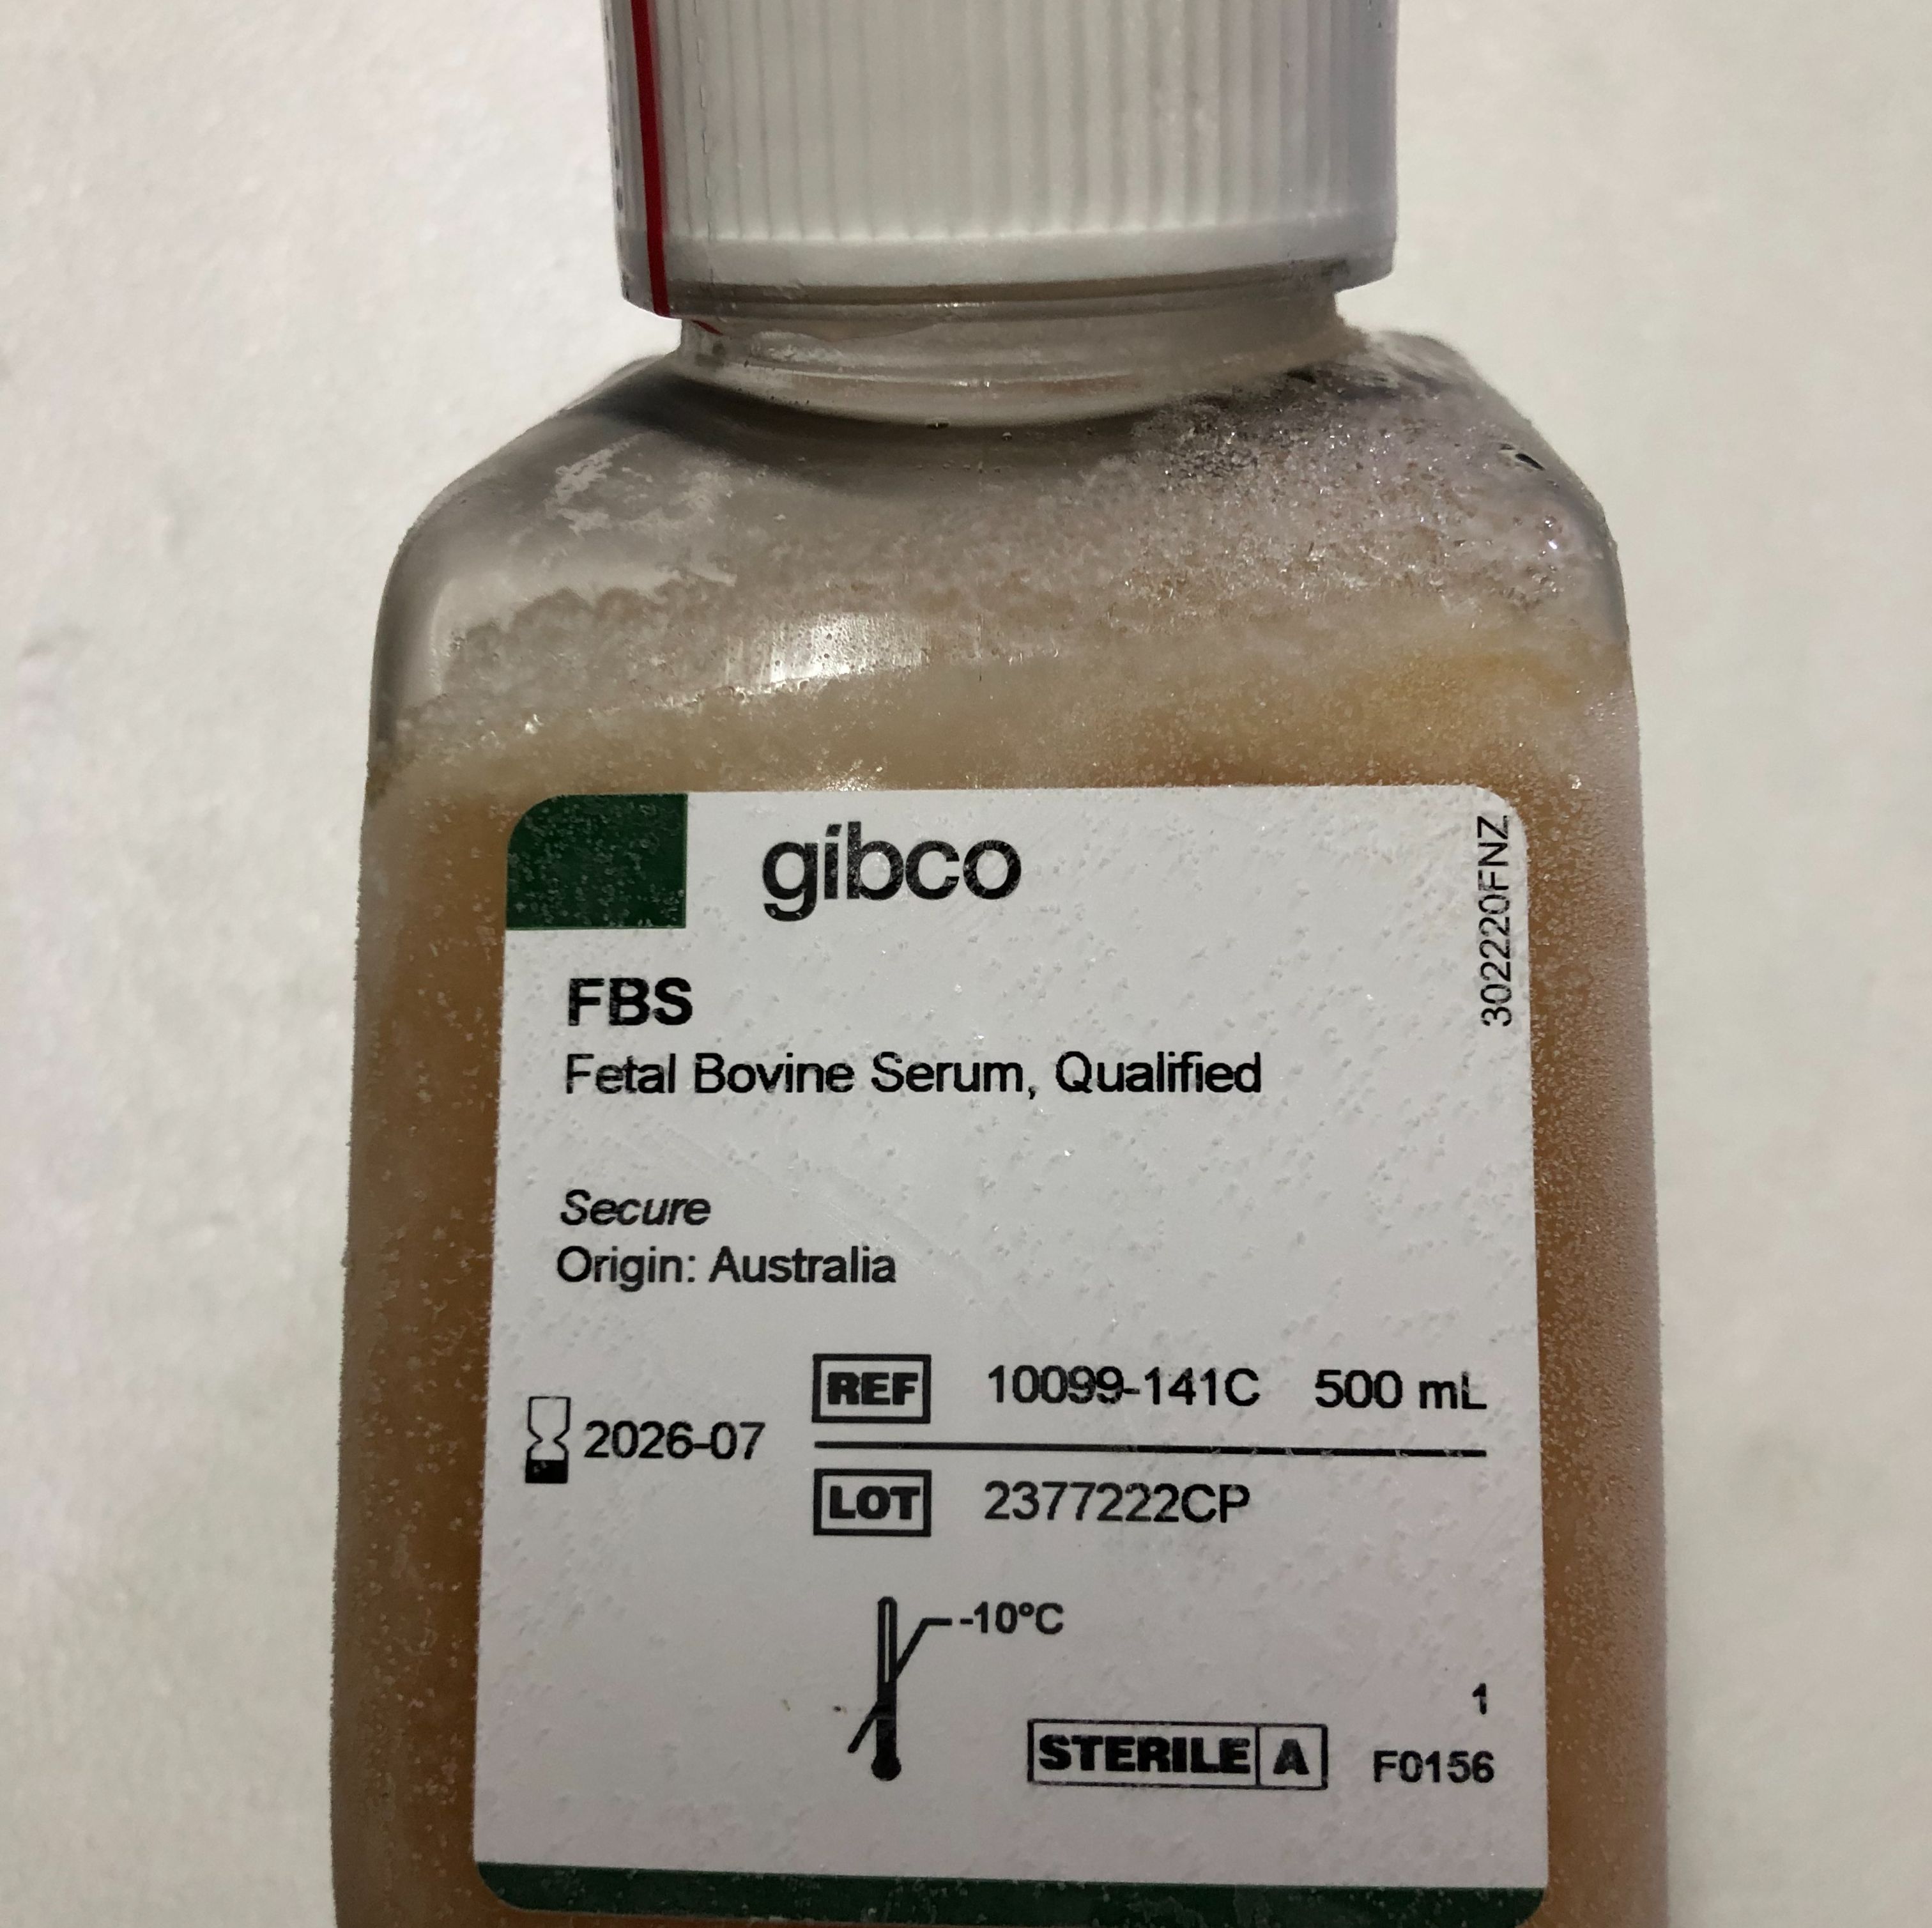 Gibco货号10099-141C澳洲胎牛血清13611631389上海睿安生物